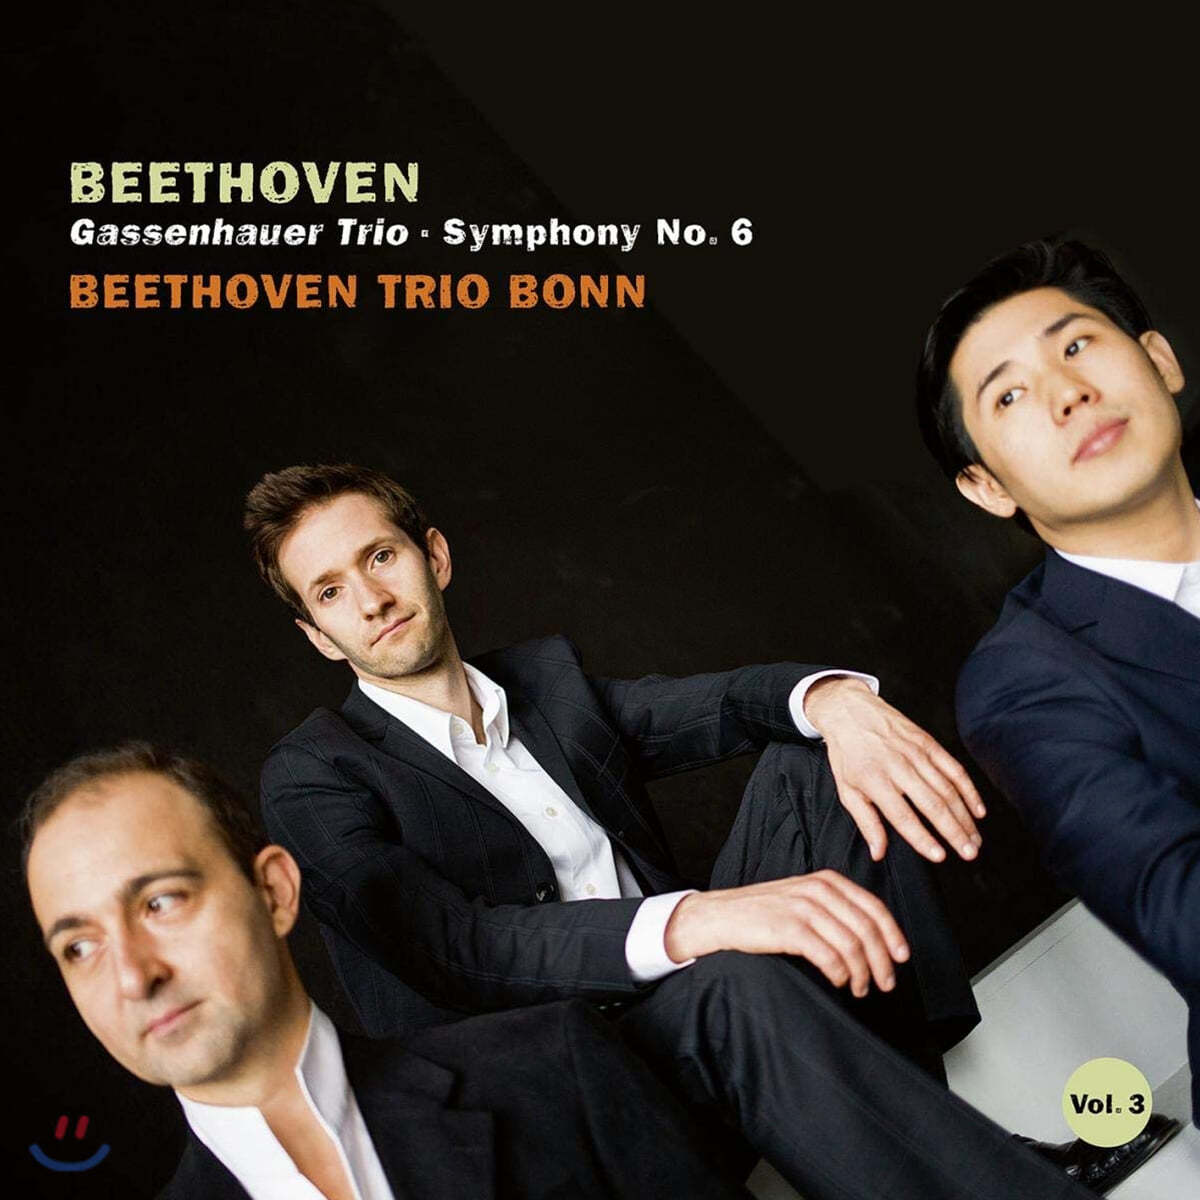 Beethoven Trio Bonn 베토벤: 피아노 3중주 4번, 교향곡 6번 [피아노 3중주 버전] - 베토벤 트리오 본   